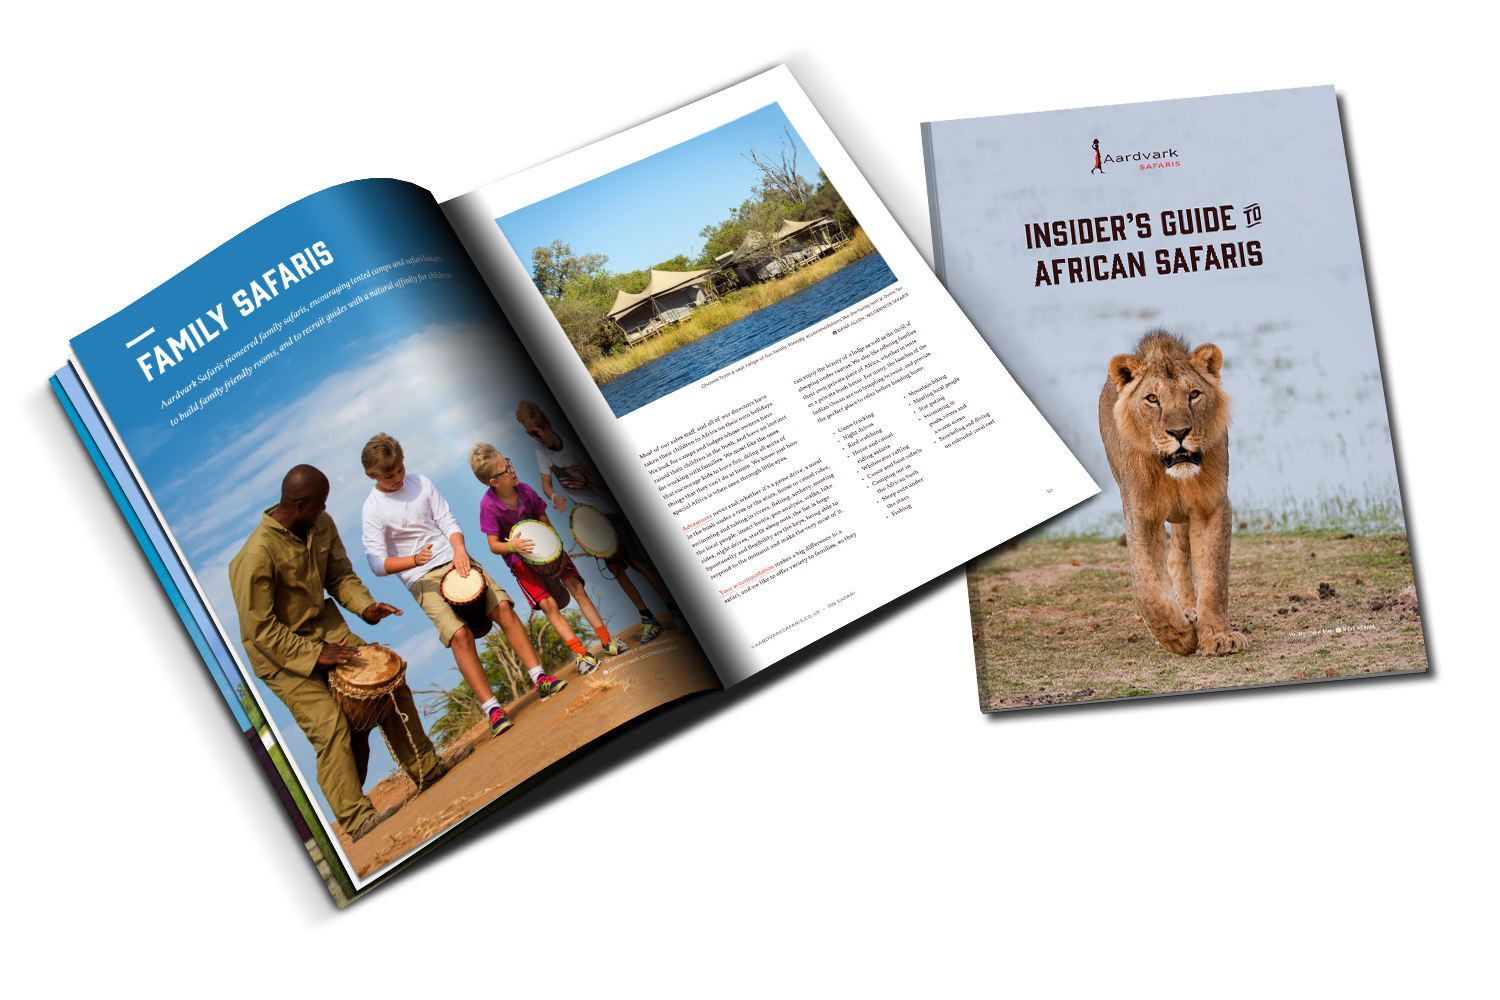 Insider Guide to African safaris - Family safaris